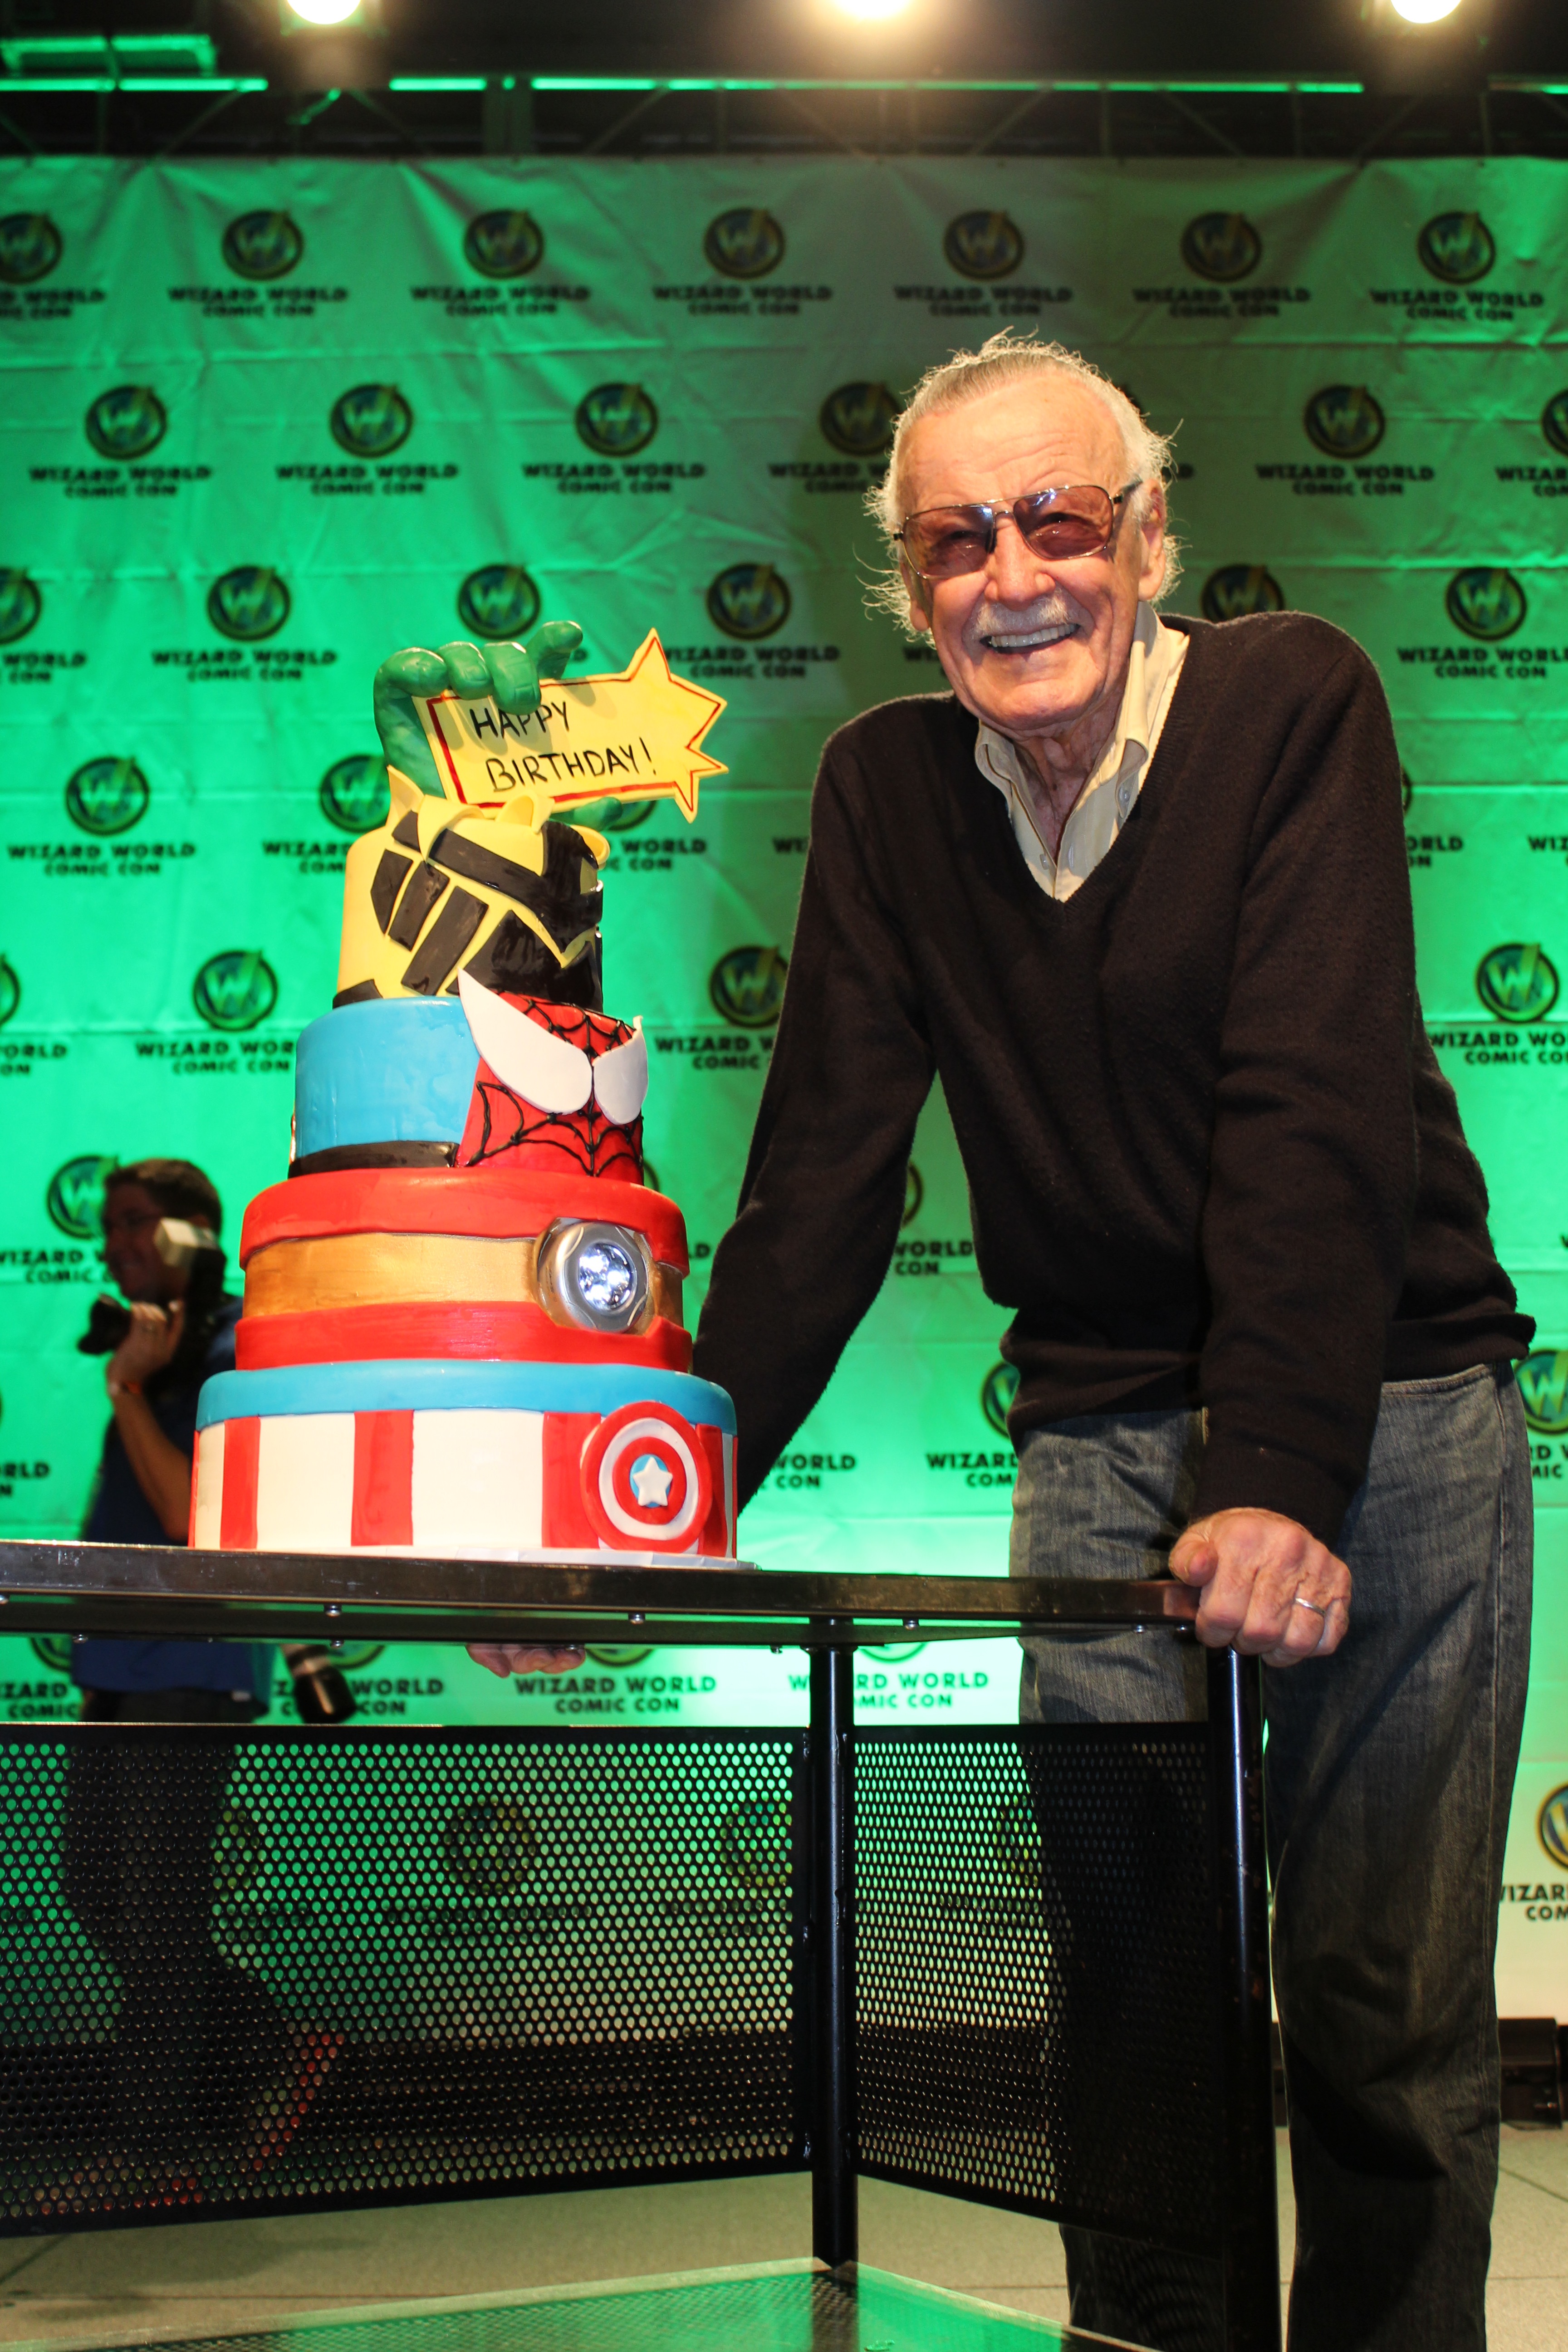 Stan Lee celebrating his birthday at Austin Comic Con